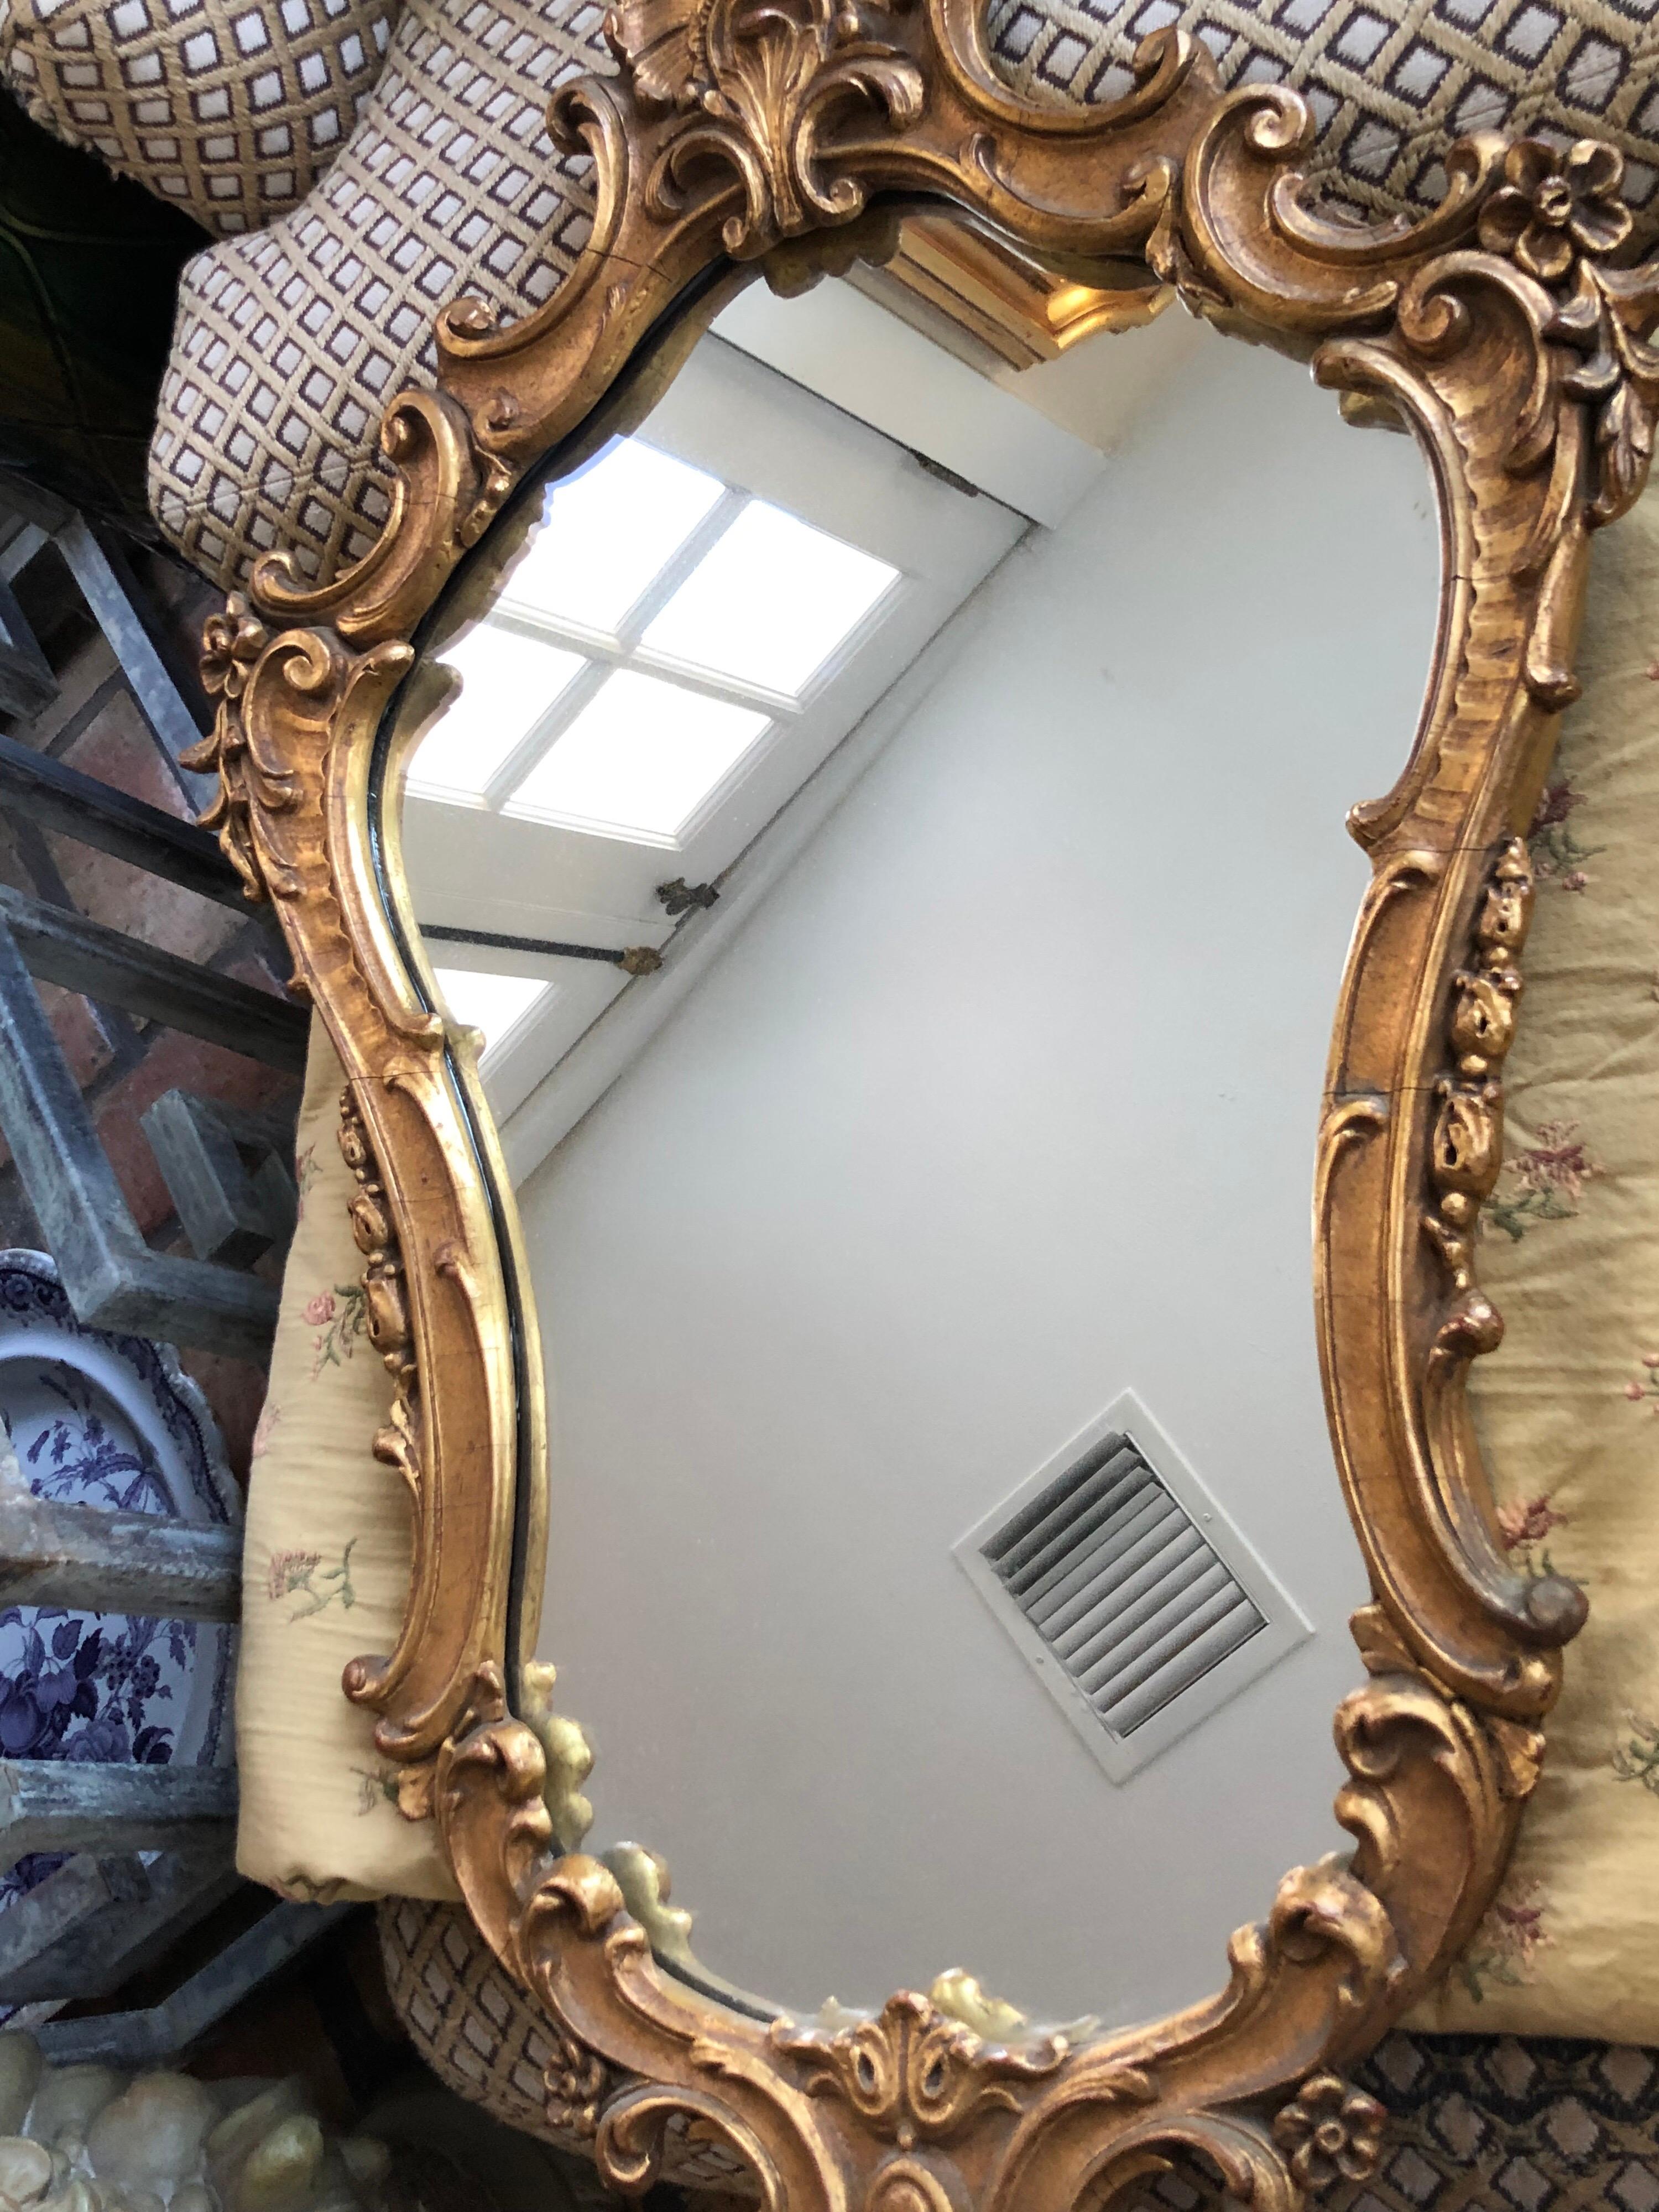 Florentine Italian mirror. Perfect for a small bathroom vanity. Delicate and feminine.